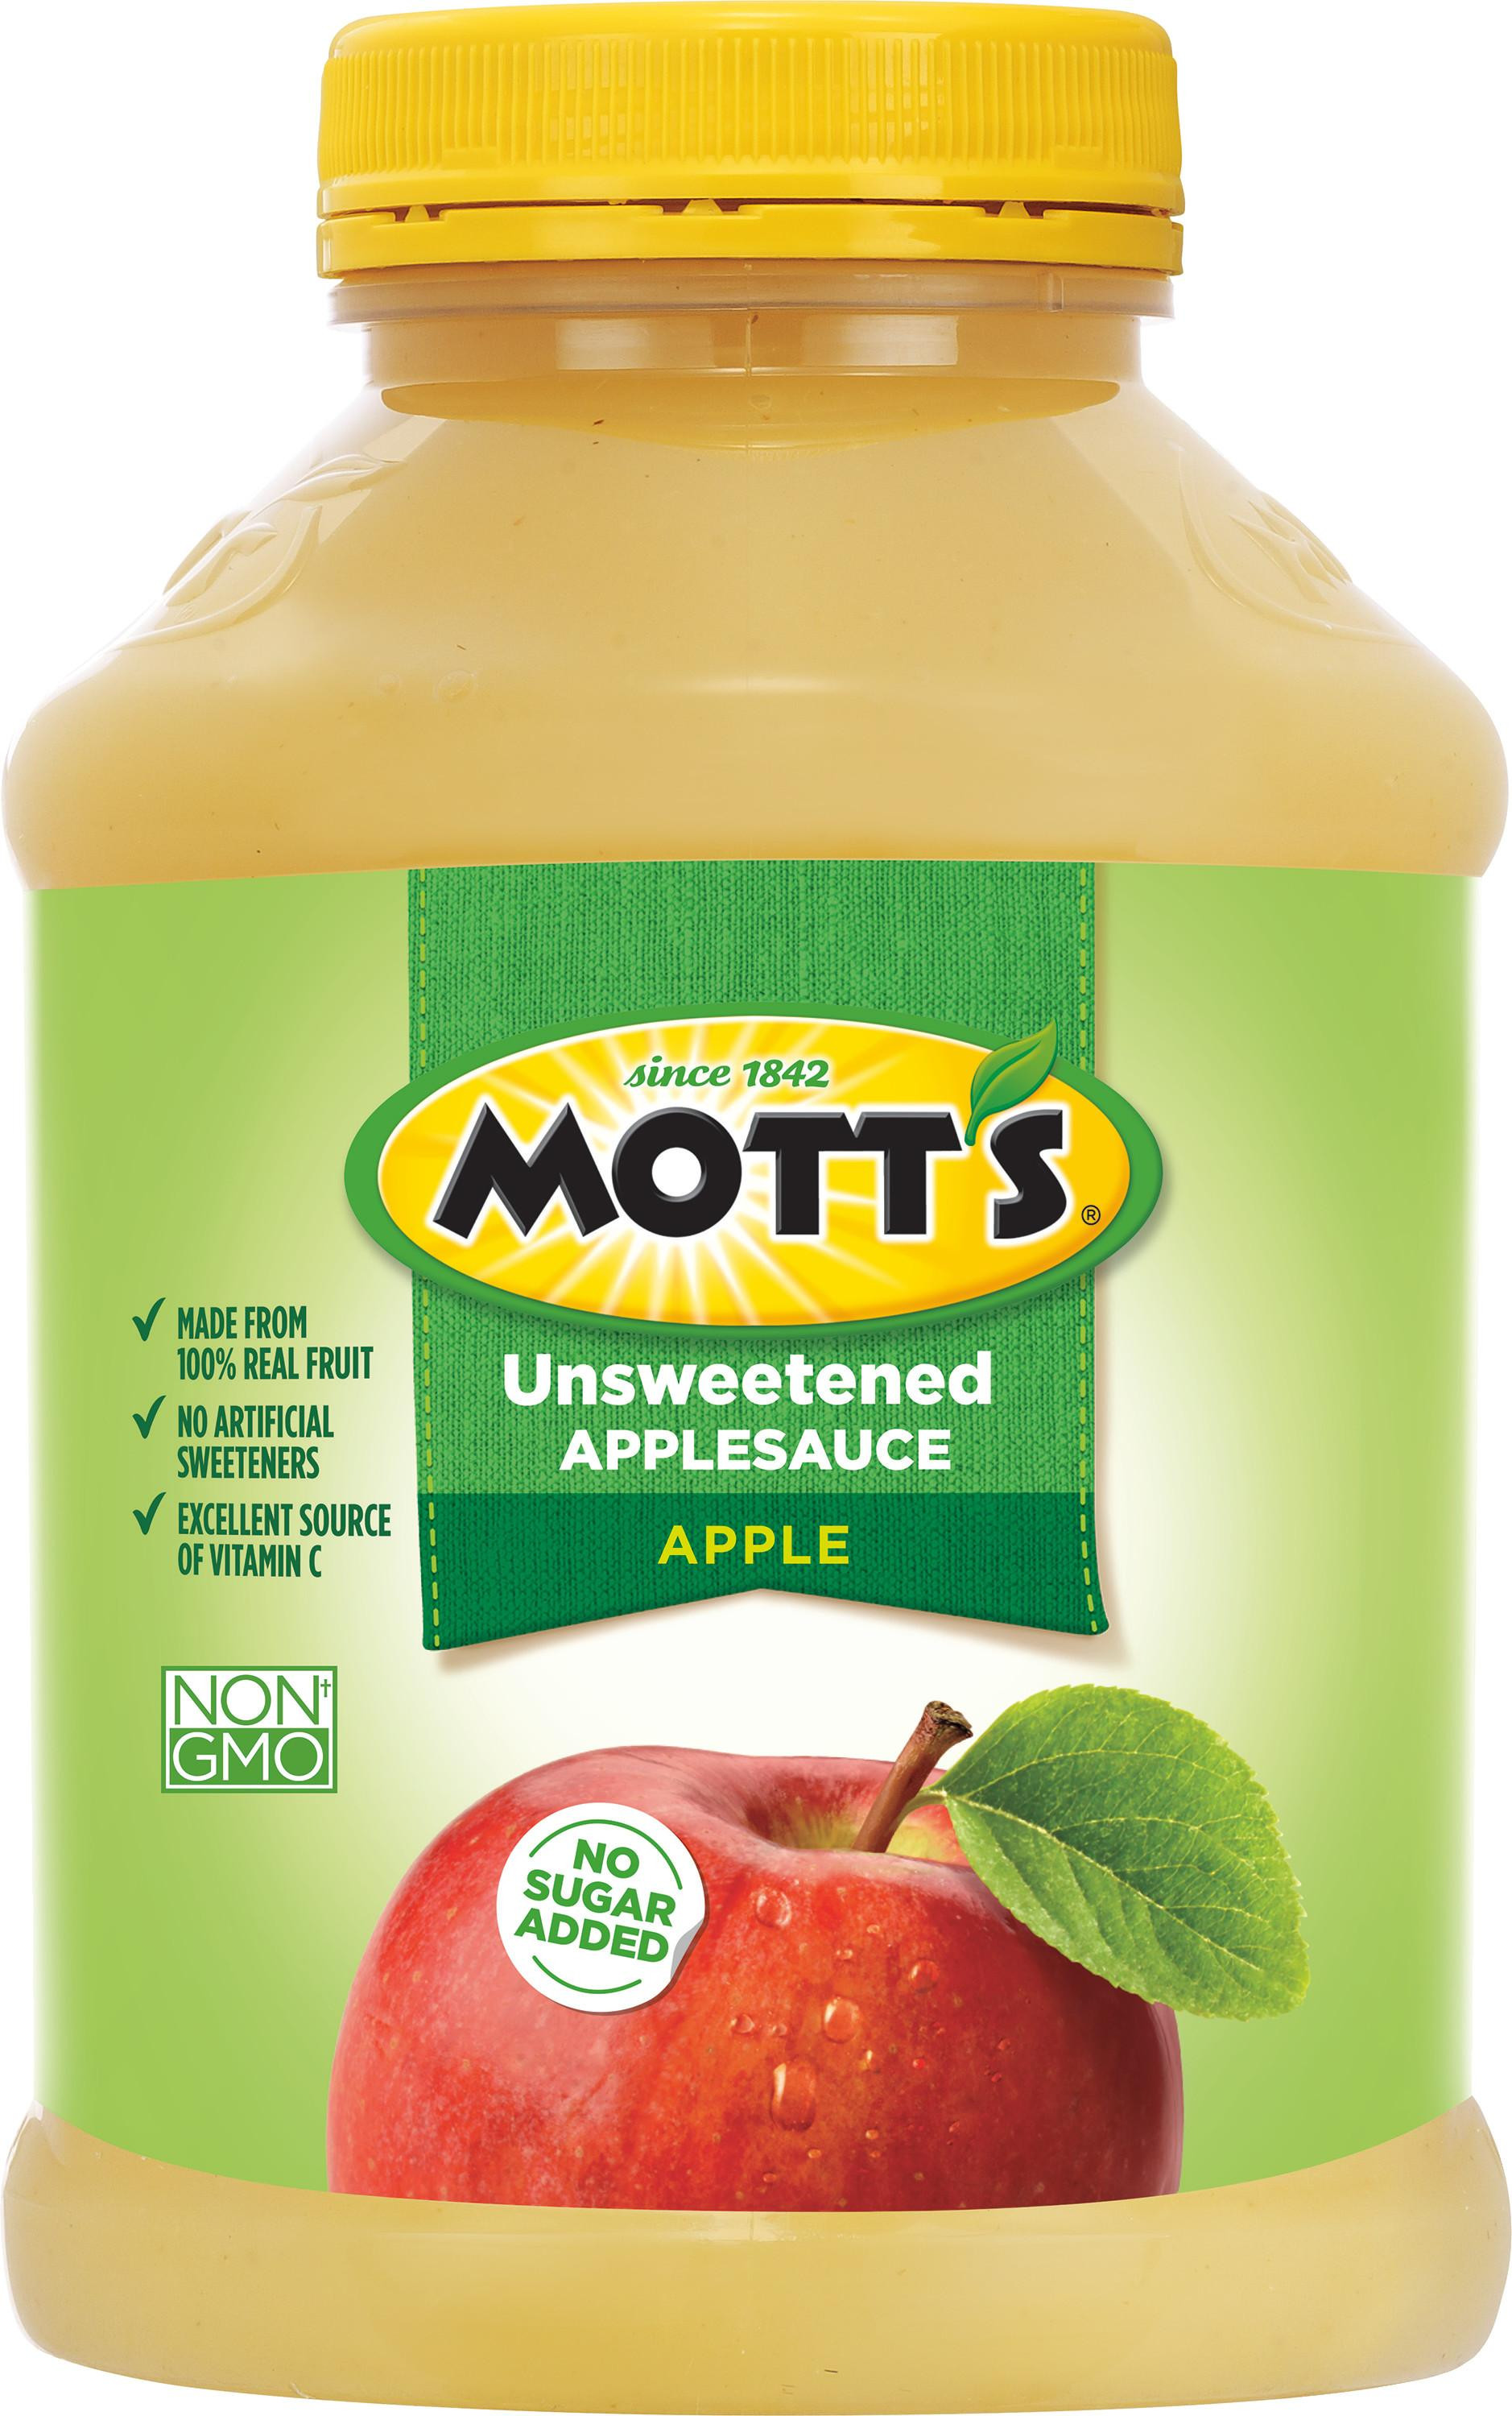 Motts Organic Applesauce
 Mott s Unsweetened Applesauce 46 oz jars Pack of 8